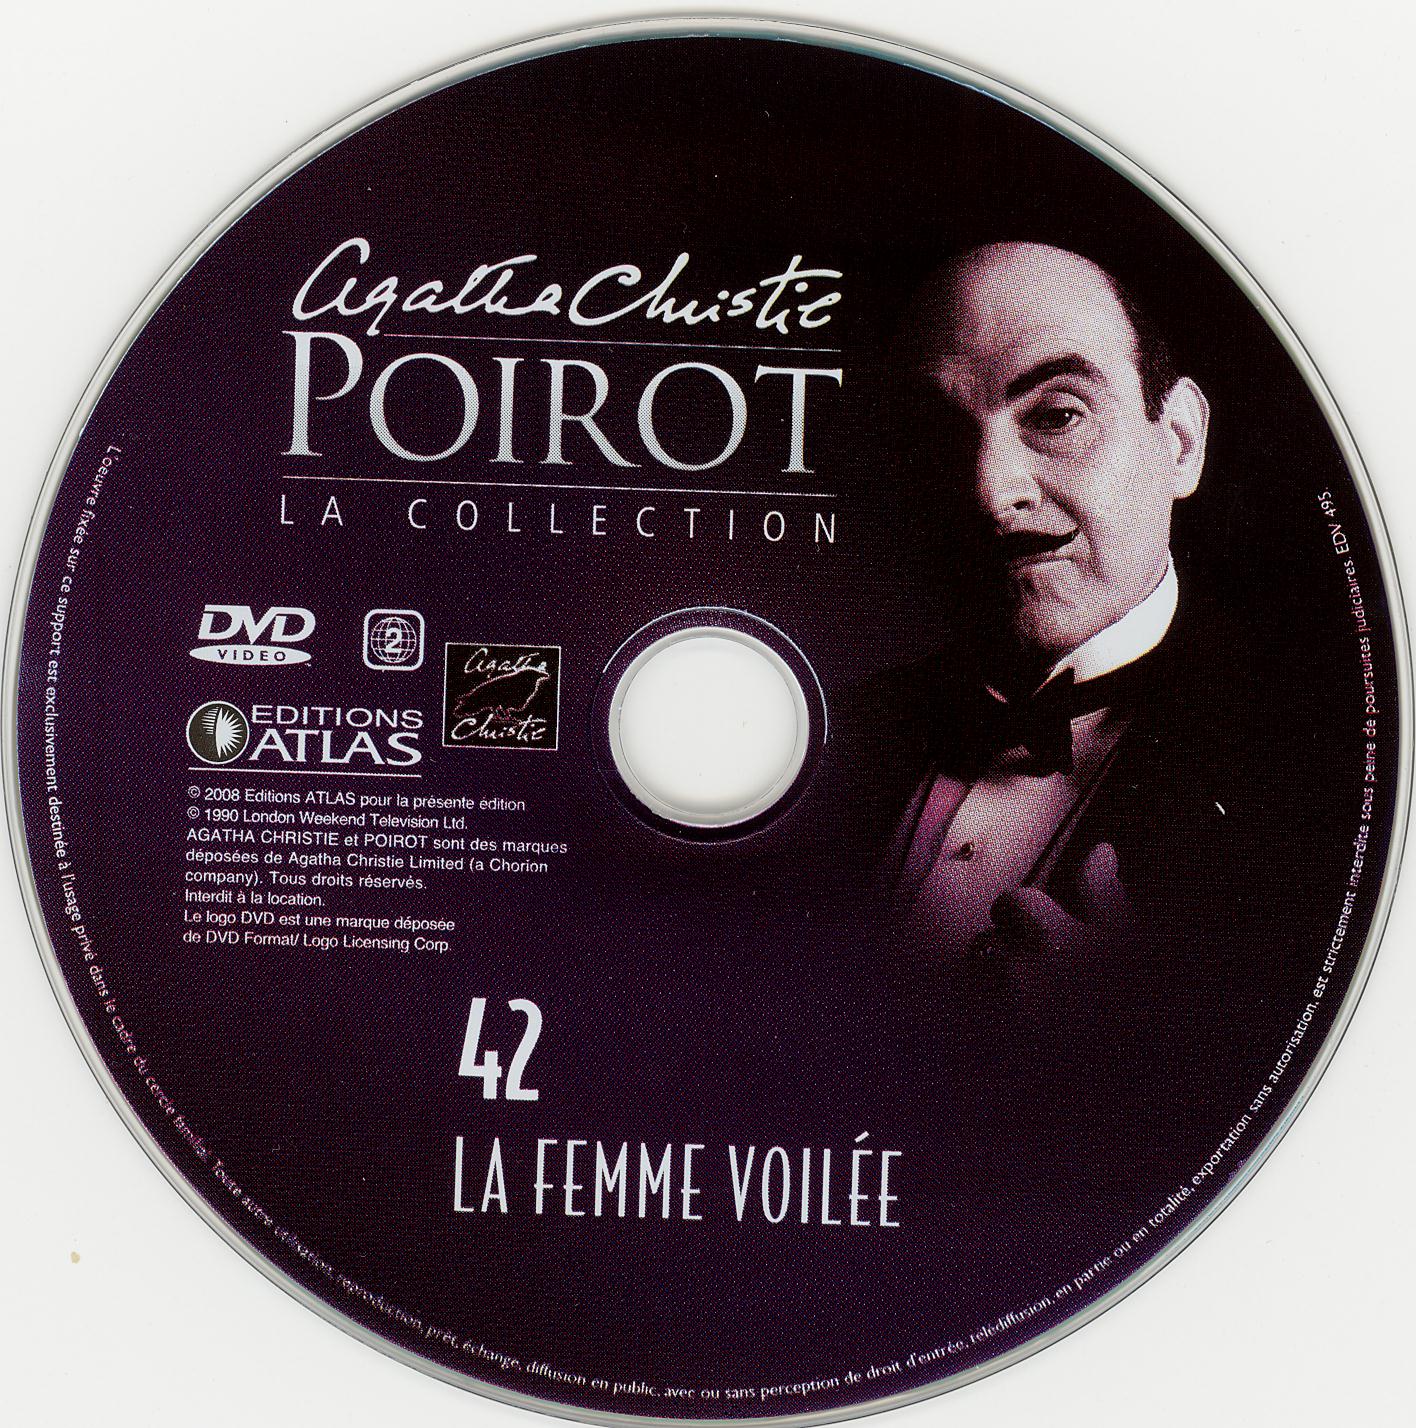 Hercule Poirot vol 42